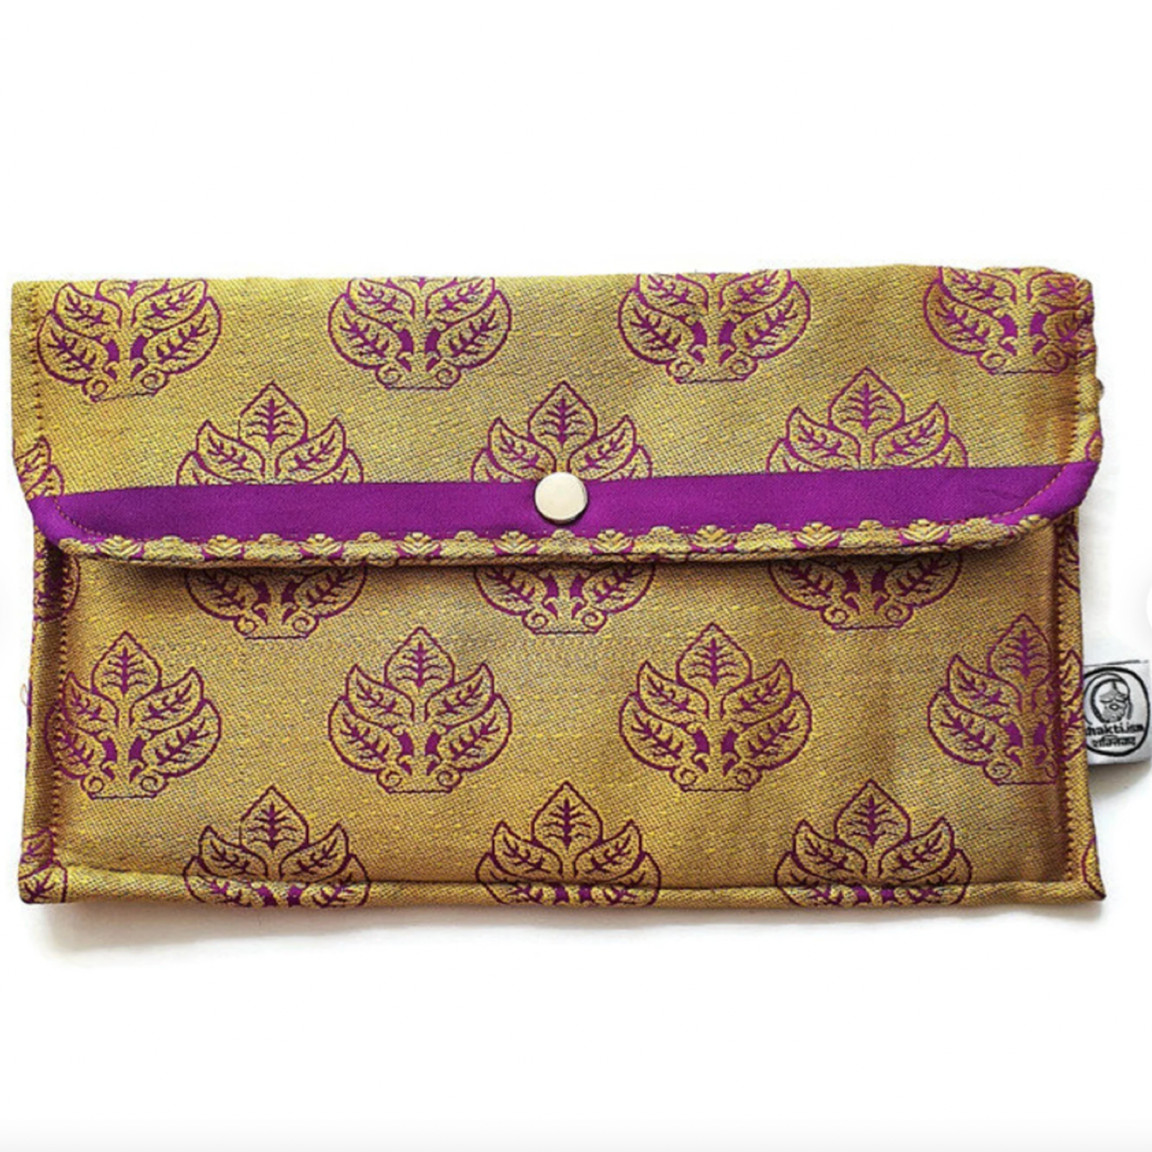 Handmade Sari Clutch Bag - Gold purple